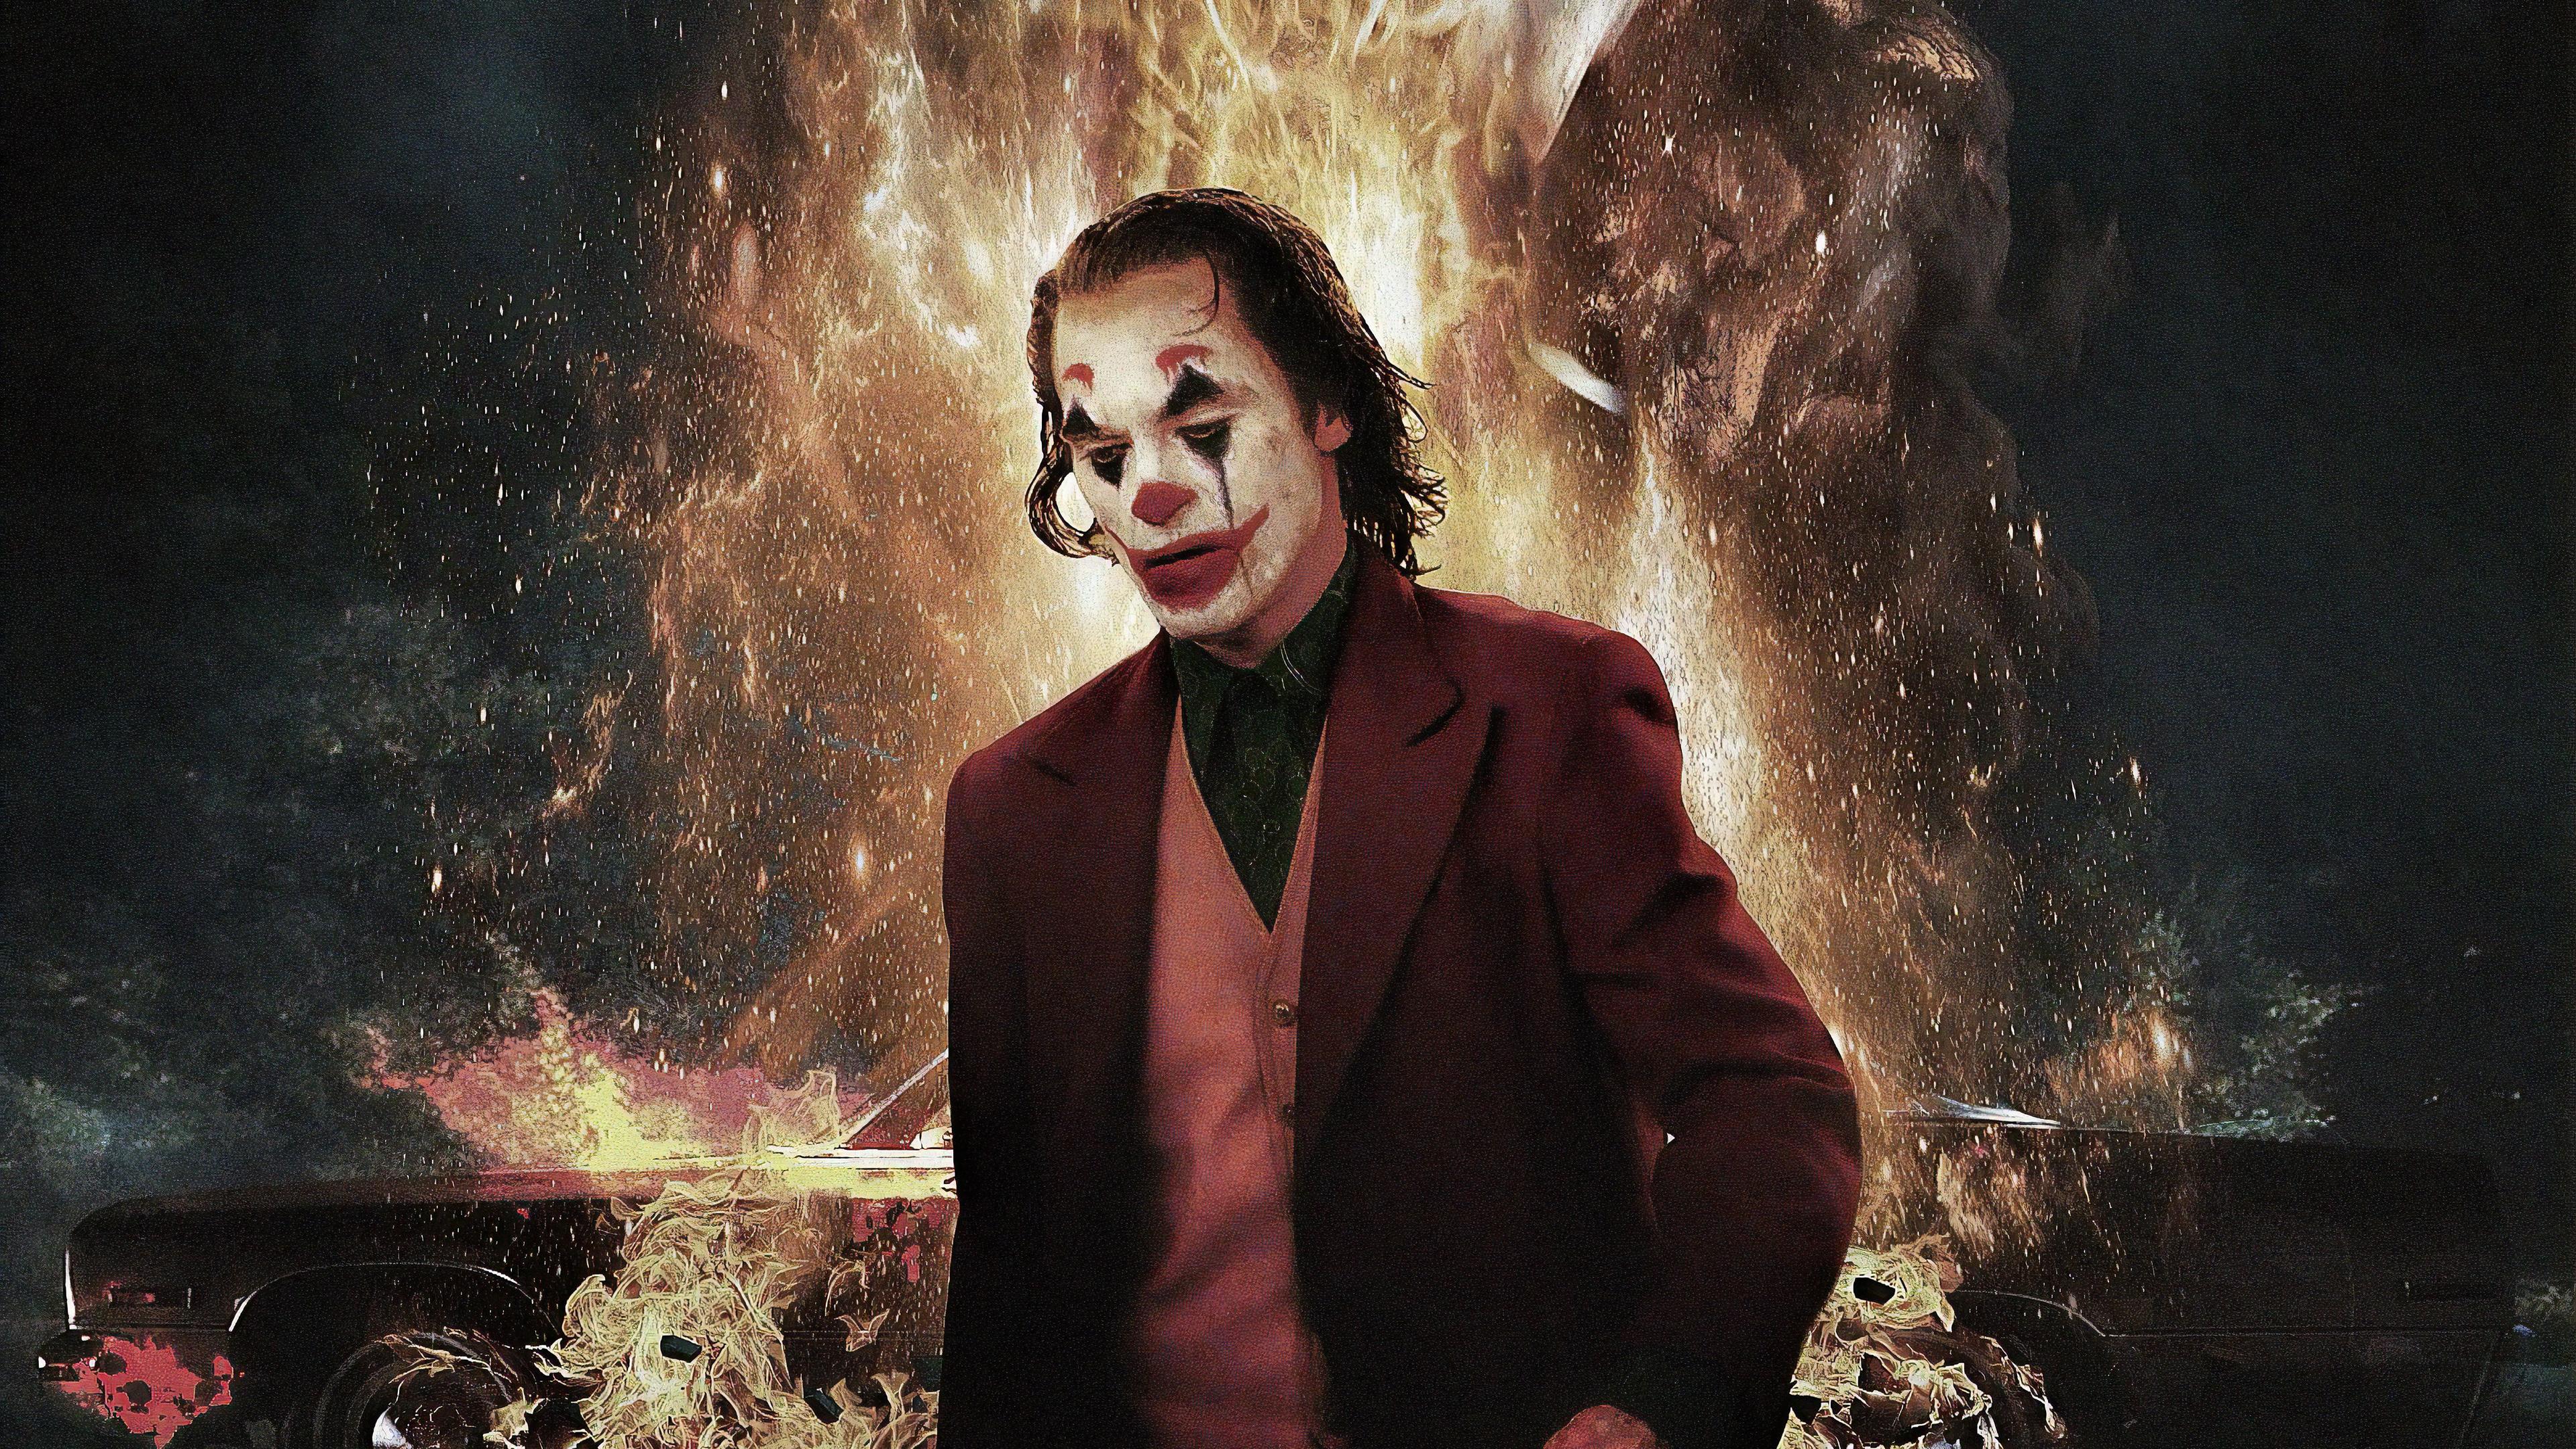 Wallpaper 4k Joker 2019 Movie New Wallpaper